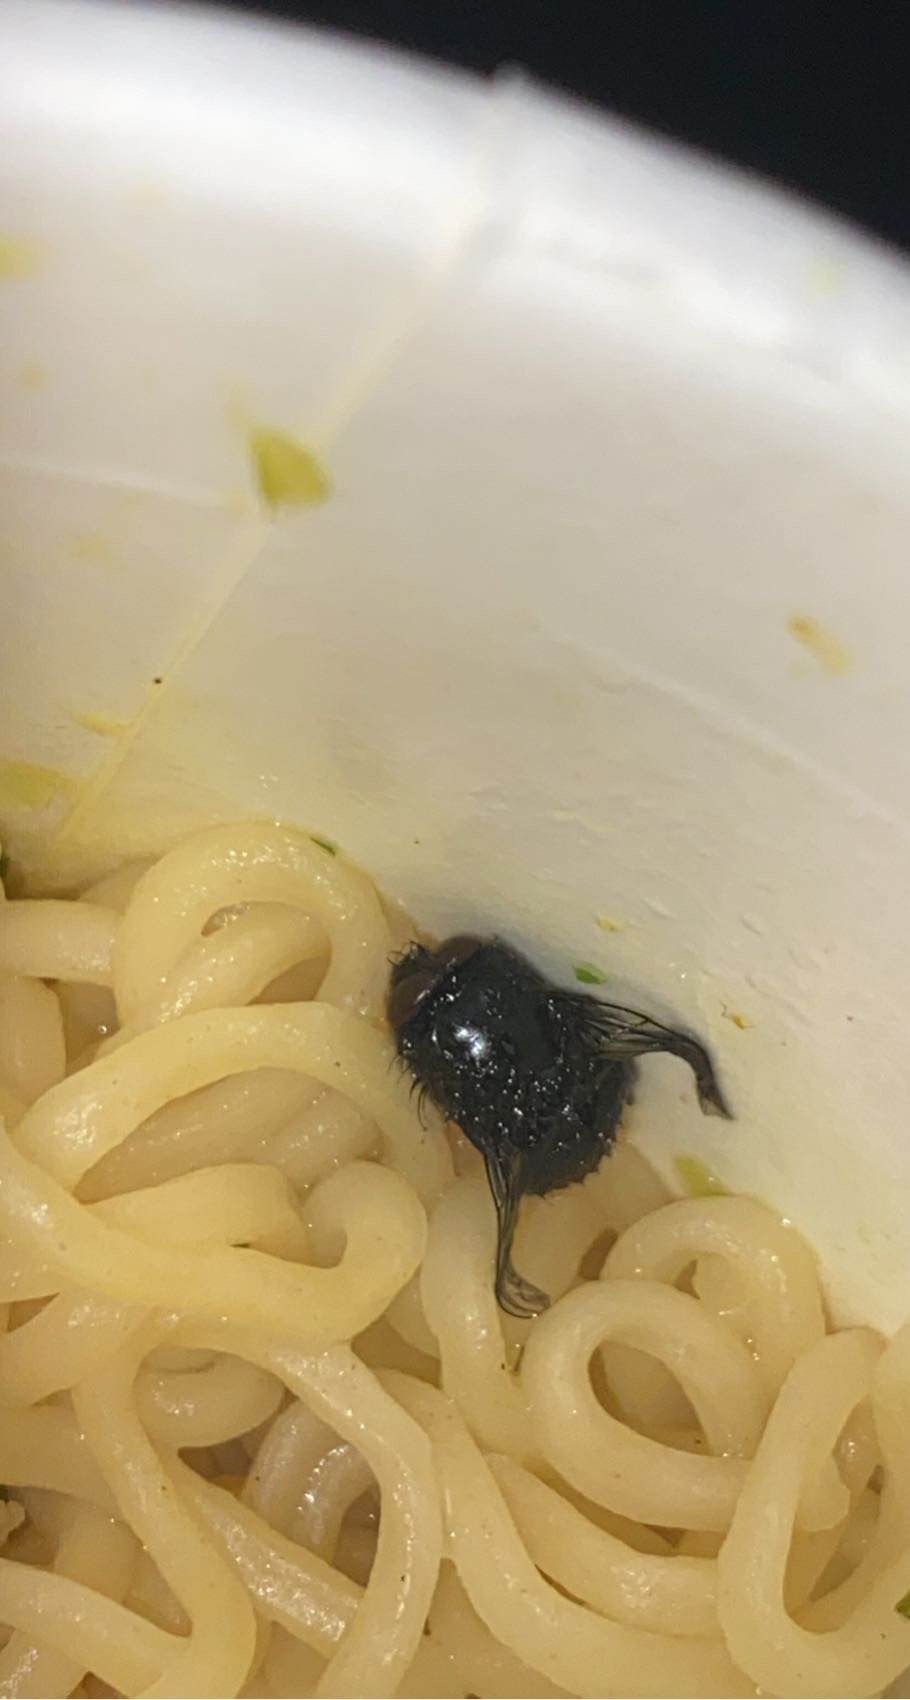 Mr. Noodles complaint Bug in cup